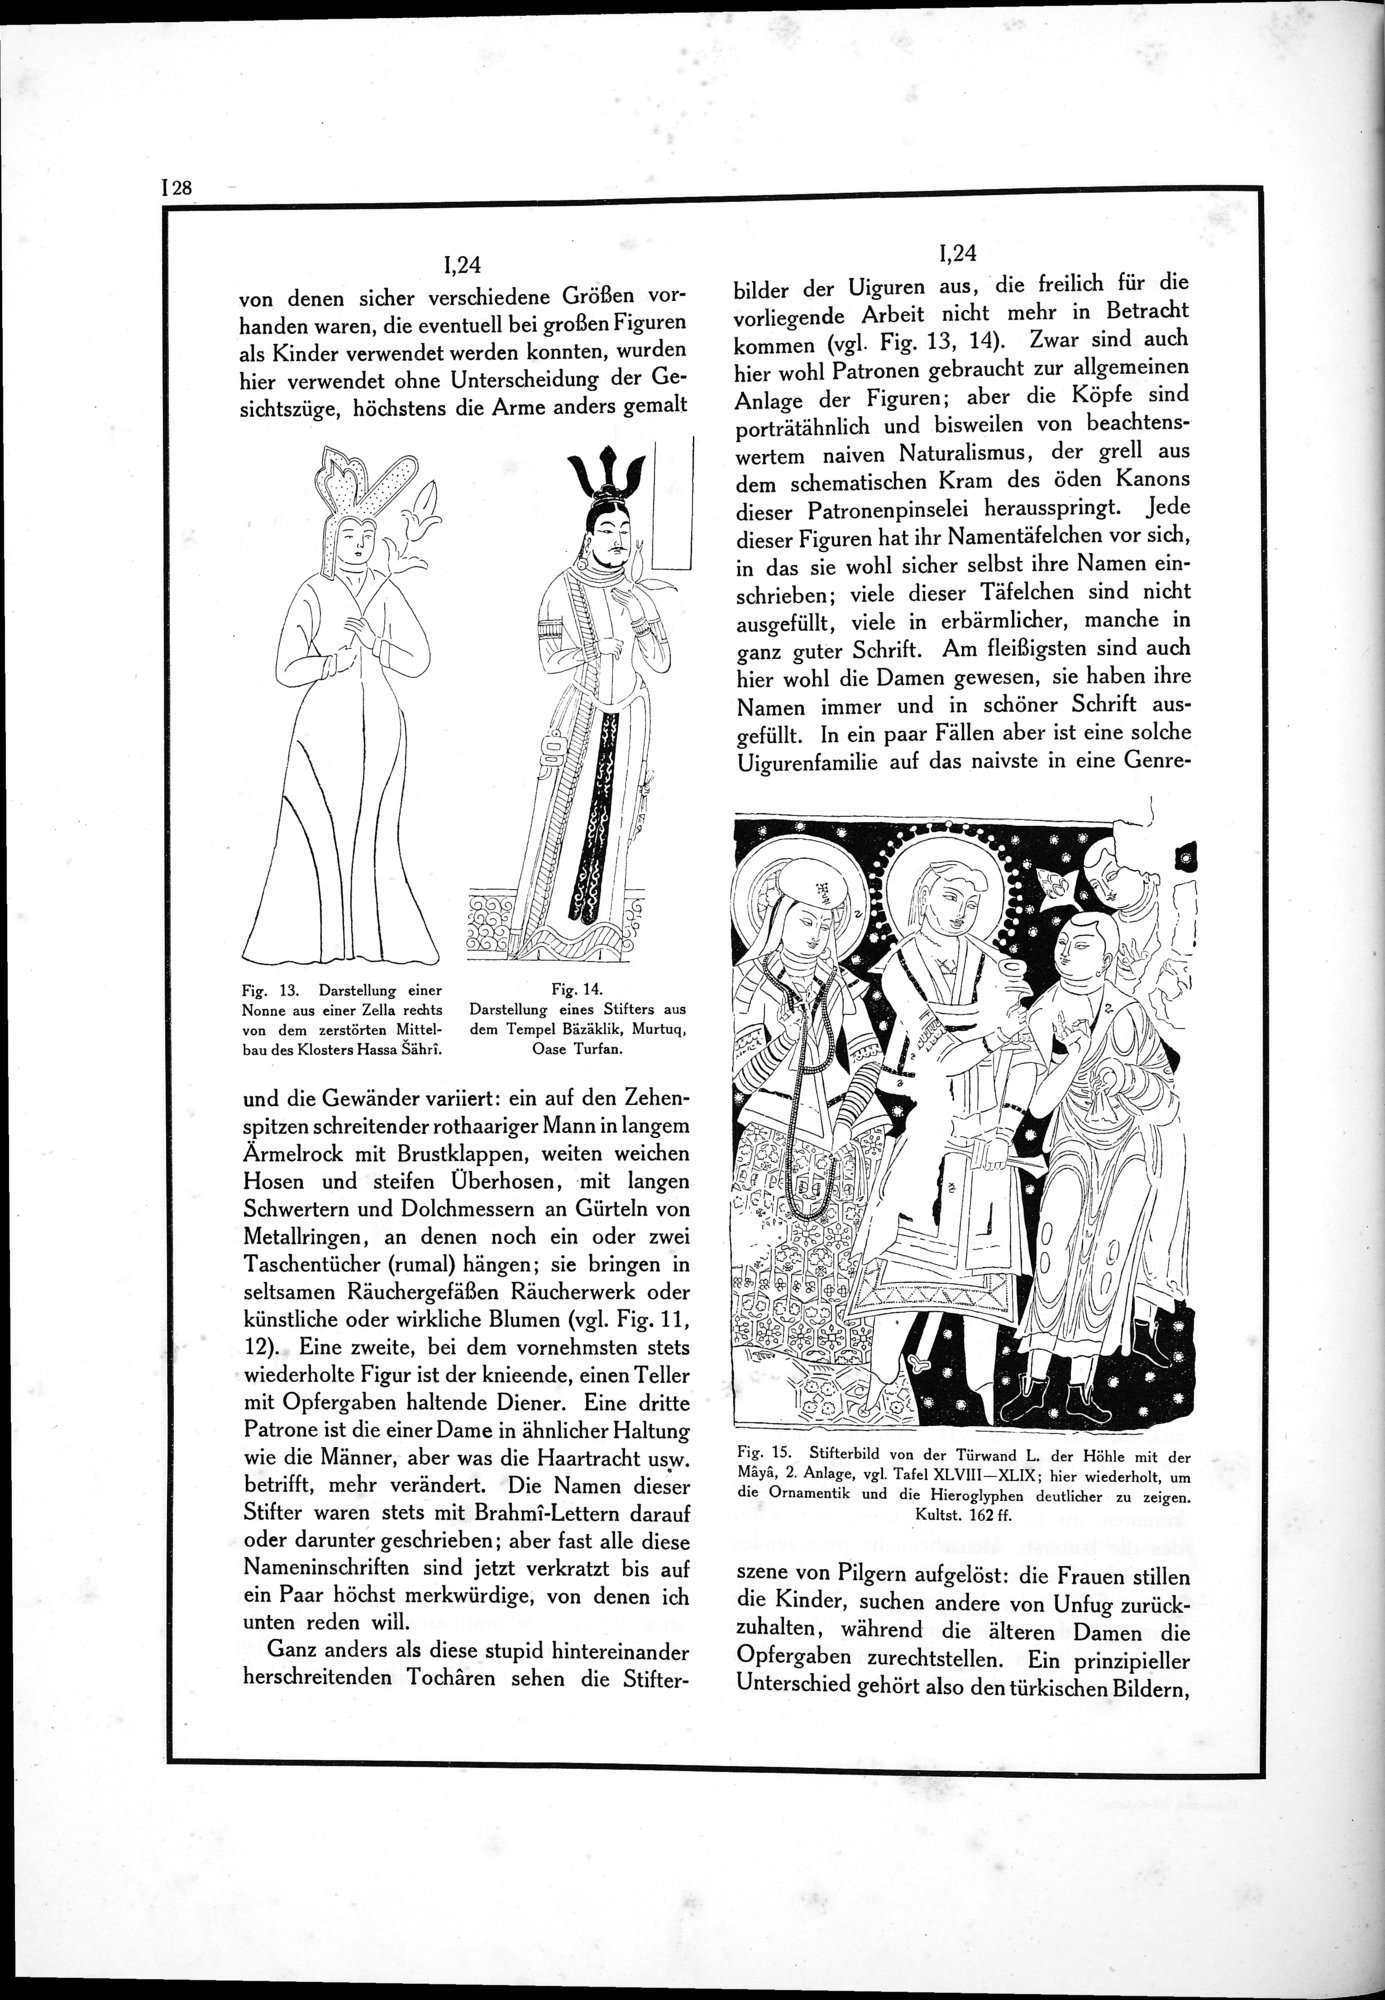 Alt-Kutscha : vol.1 / Page 40 (Grayscale High Resolution Image)